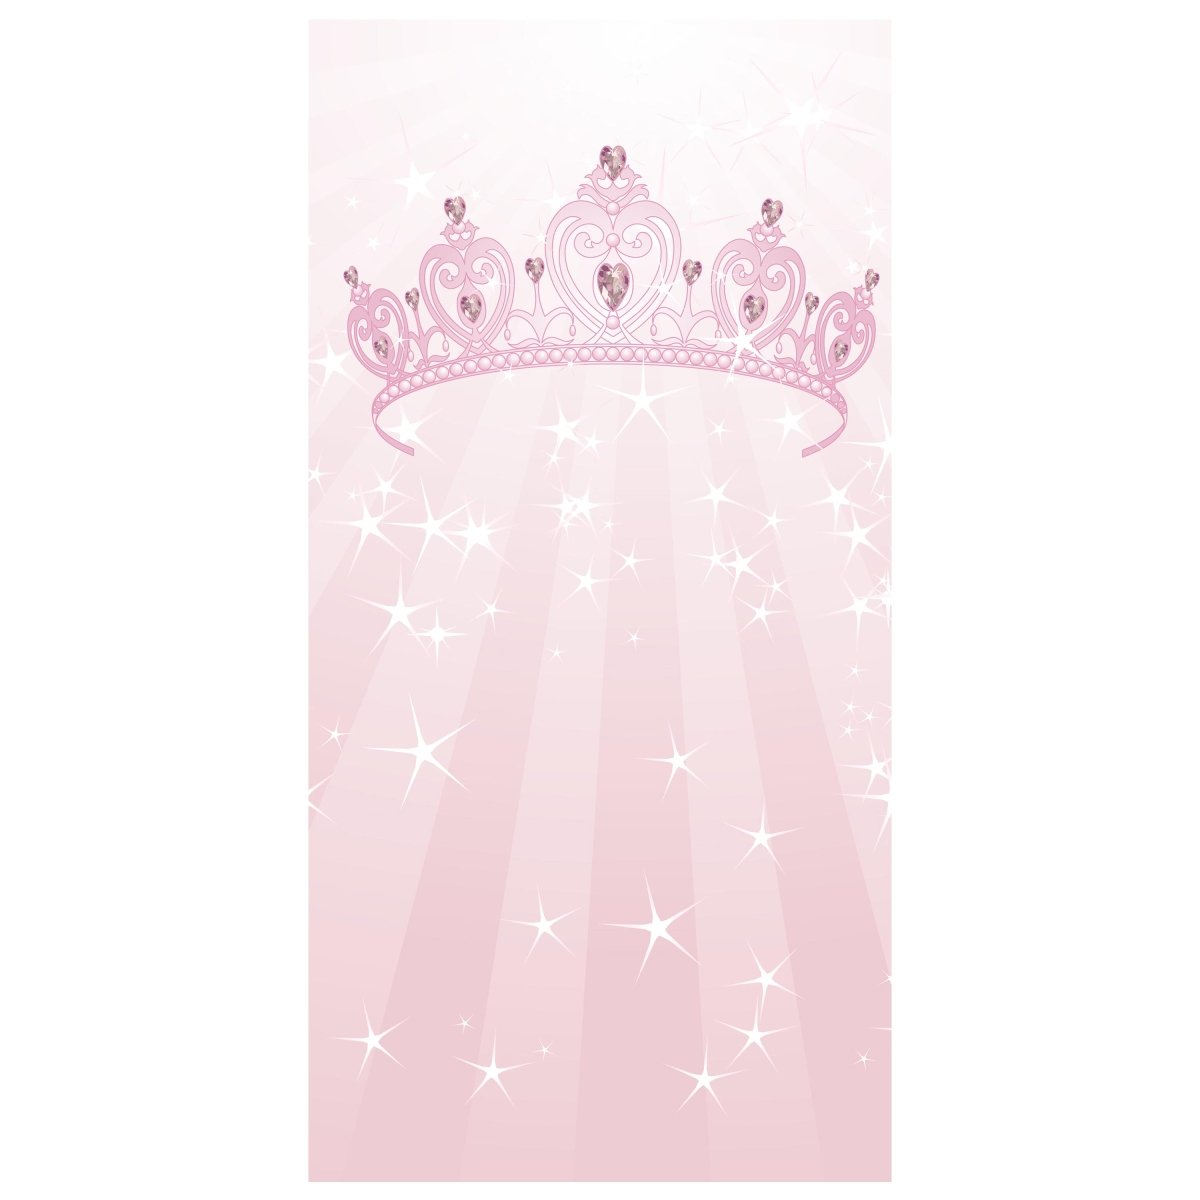 Türtapete Prinzessinnenkrone M0436 - Bild 2